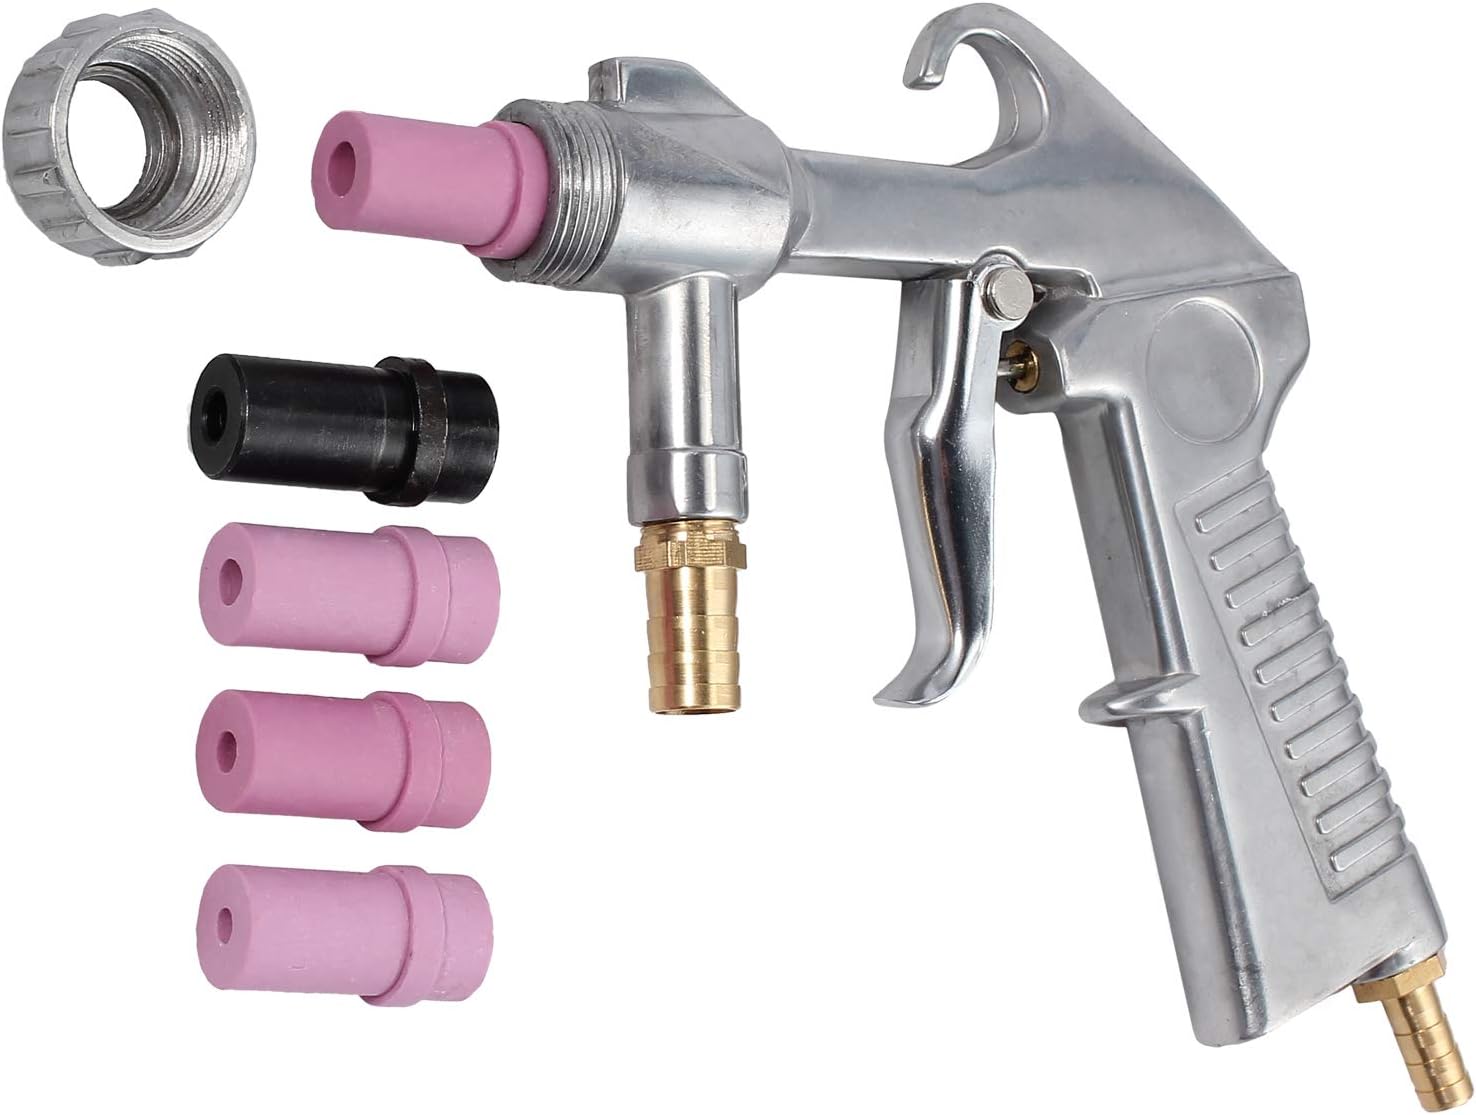 Fedlink AMTOVL Sand Blasting Gun Sandblaster + 4Pcs Ceramic Nozzles + Extra Iron Nozzle Tip Set